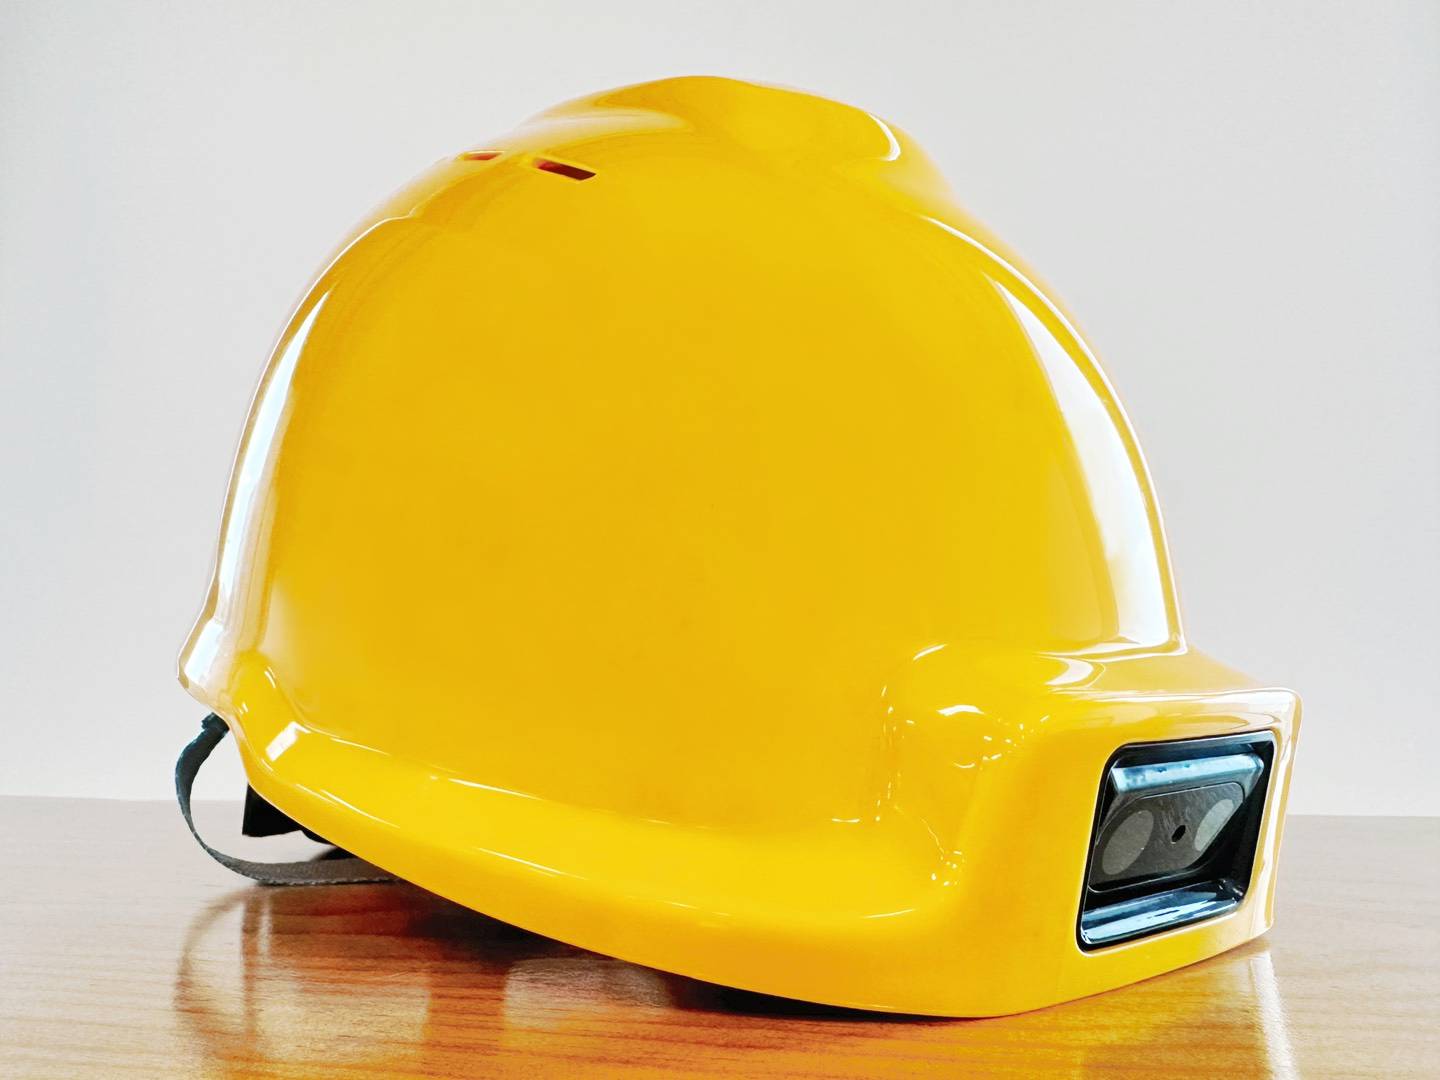 Helmet X - Smart Safety Helmet System